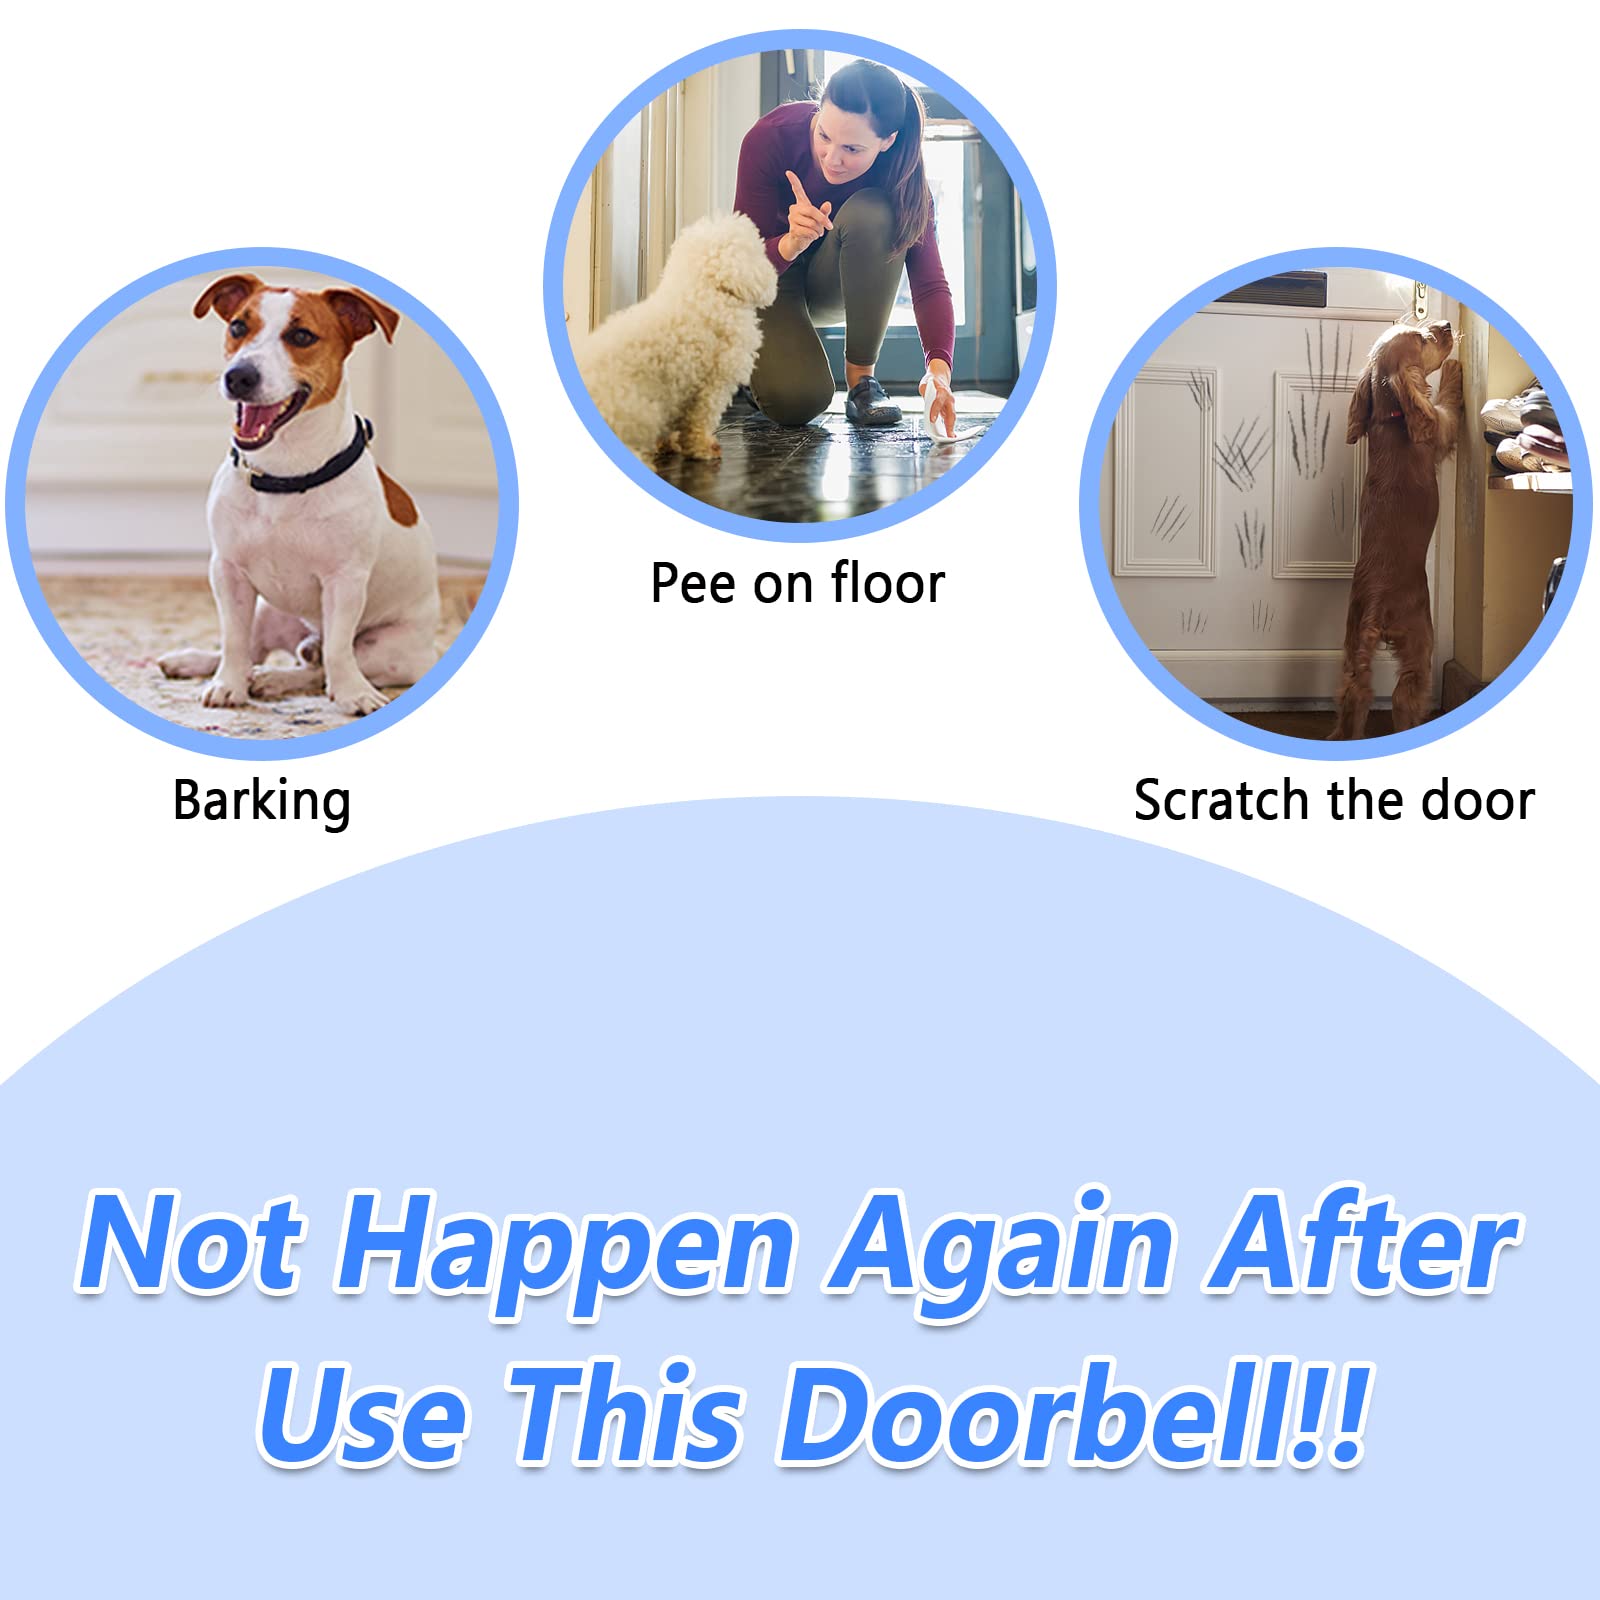 Daytech wireless dog outdoor toilet training doorbell